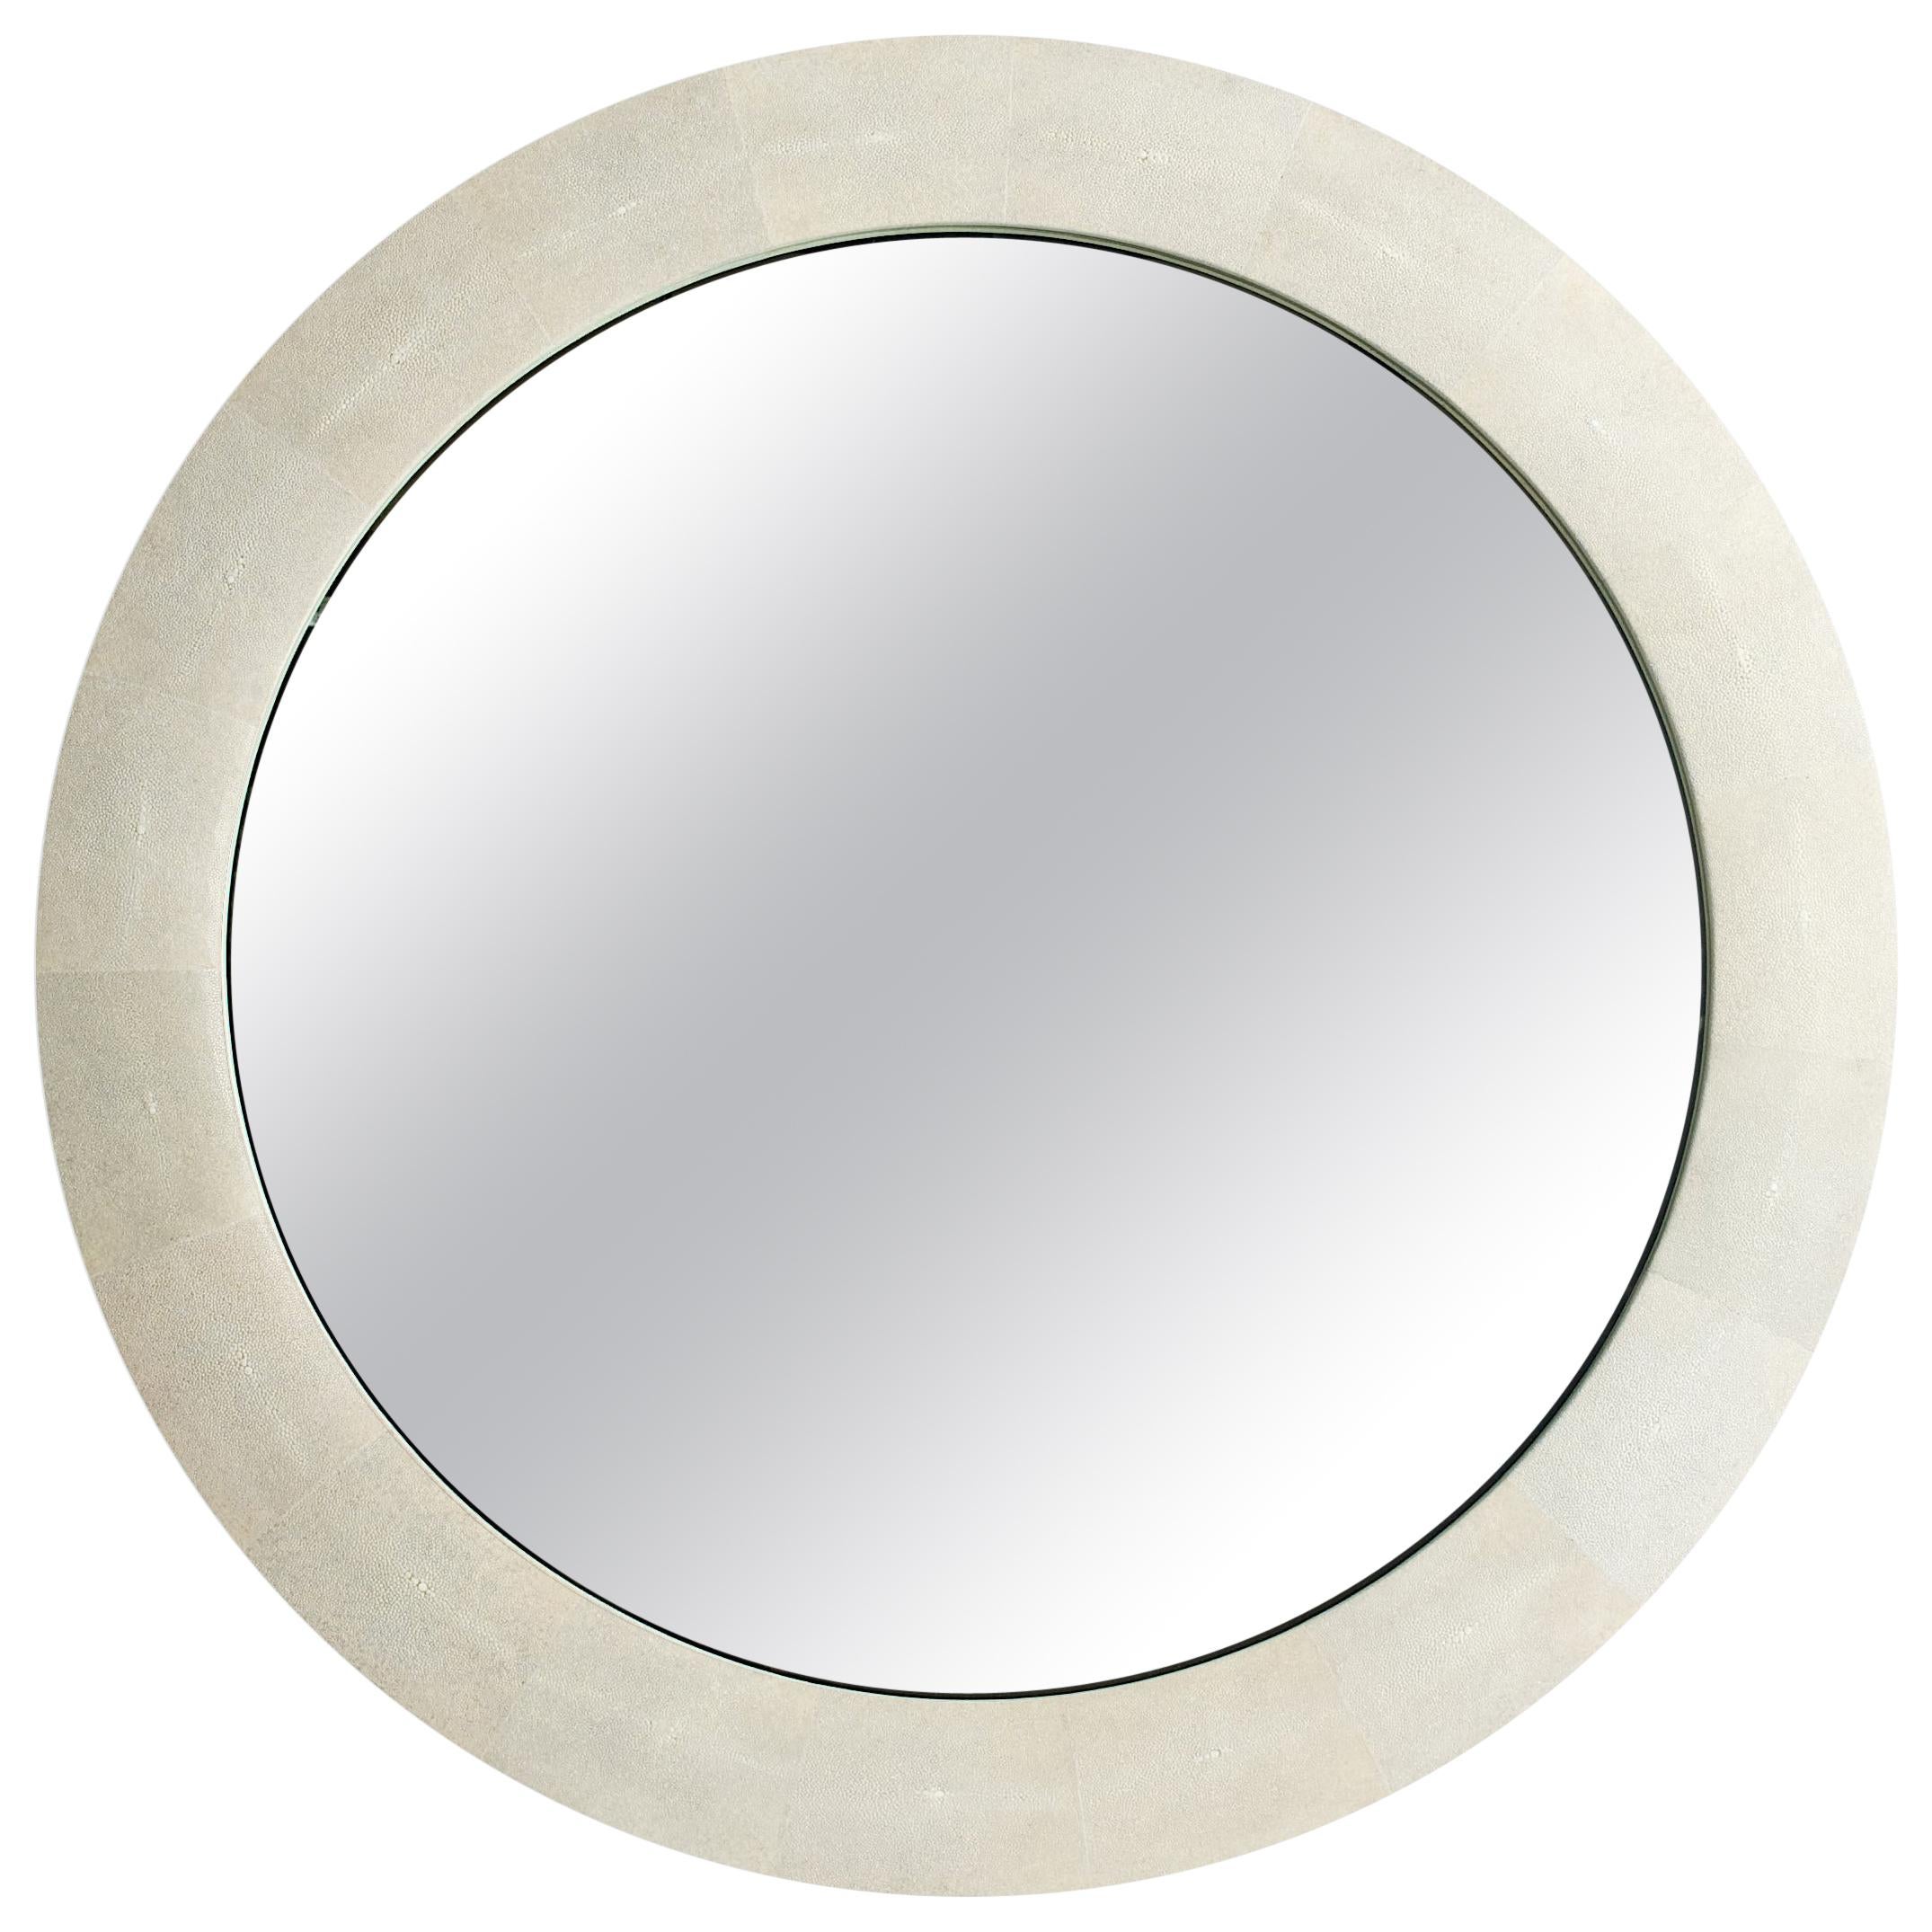 Ivory Shagreen Galucha Mirror by Elan Atelier (Preorder)